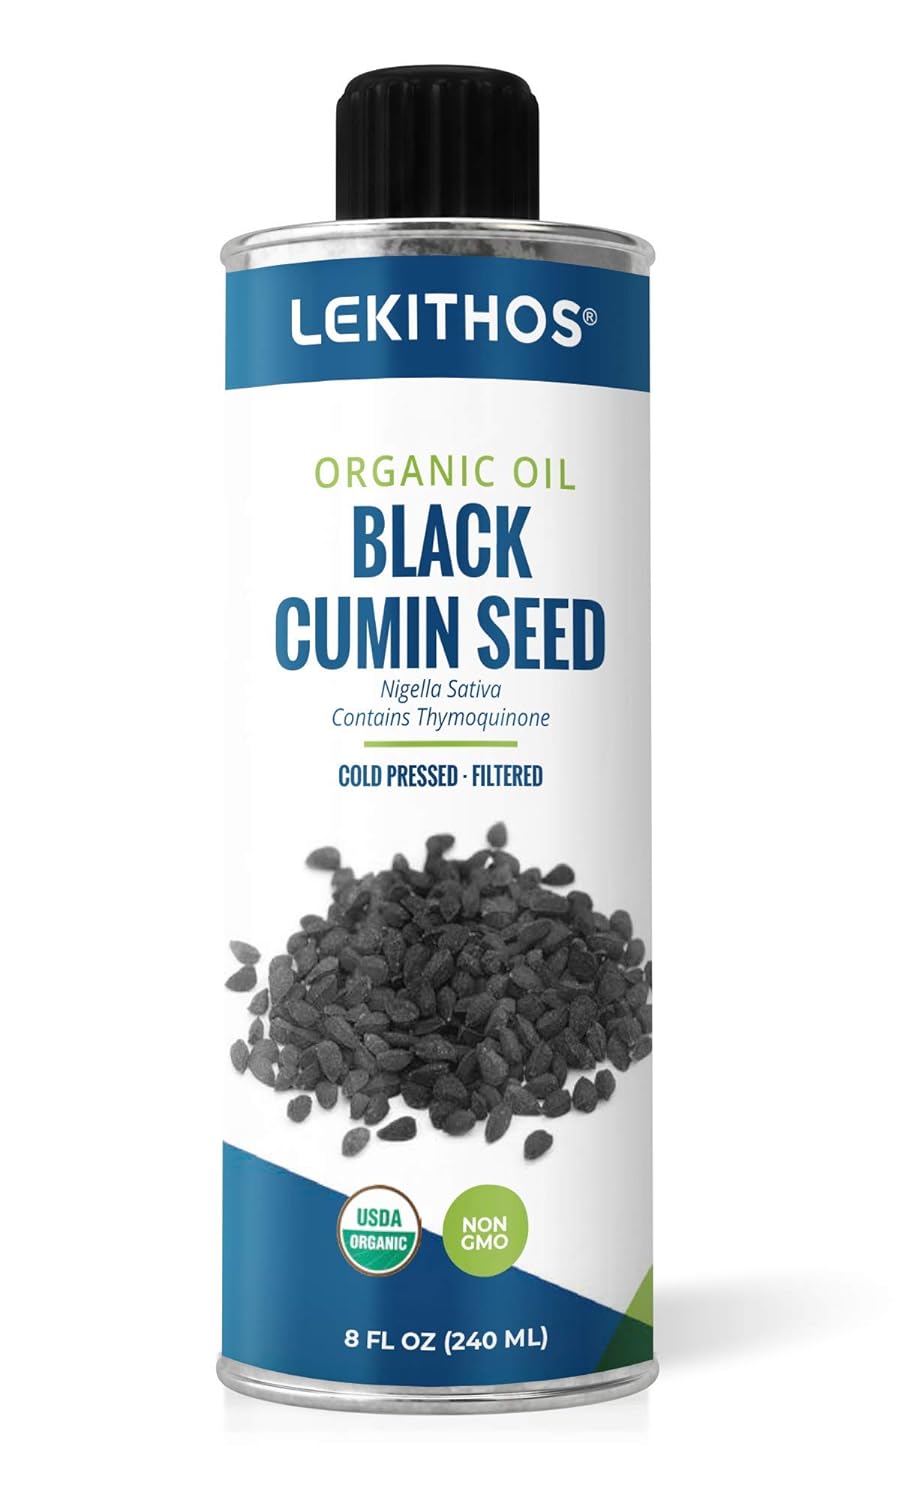 Lekithos Organic Black Cumin Seed Oil - 8 fl. oz. - Certified USDA Org